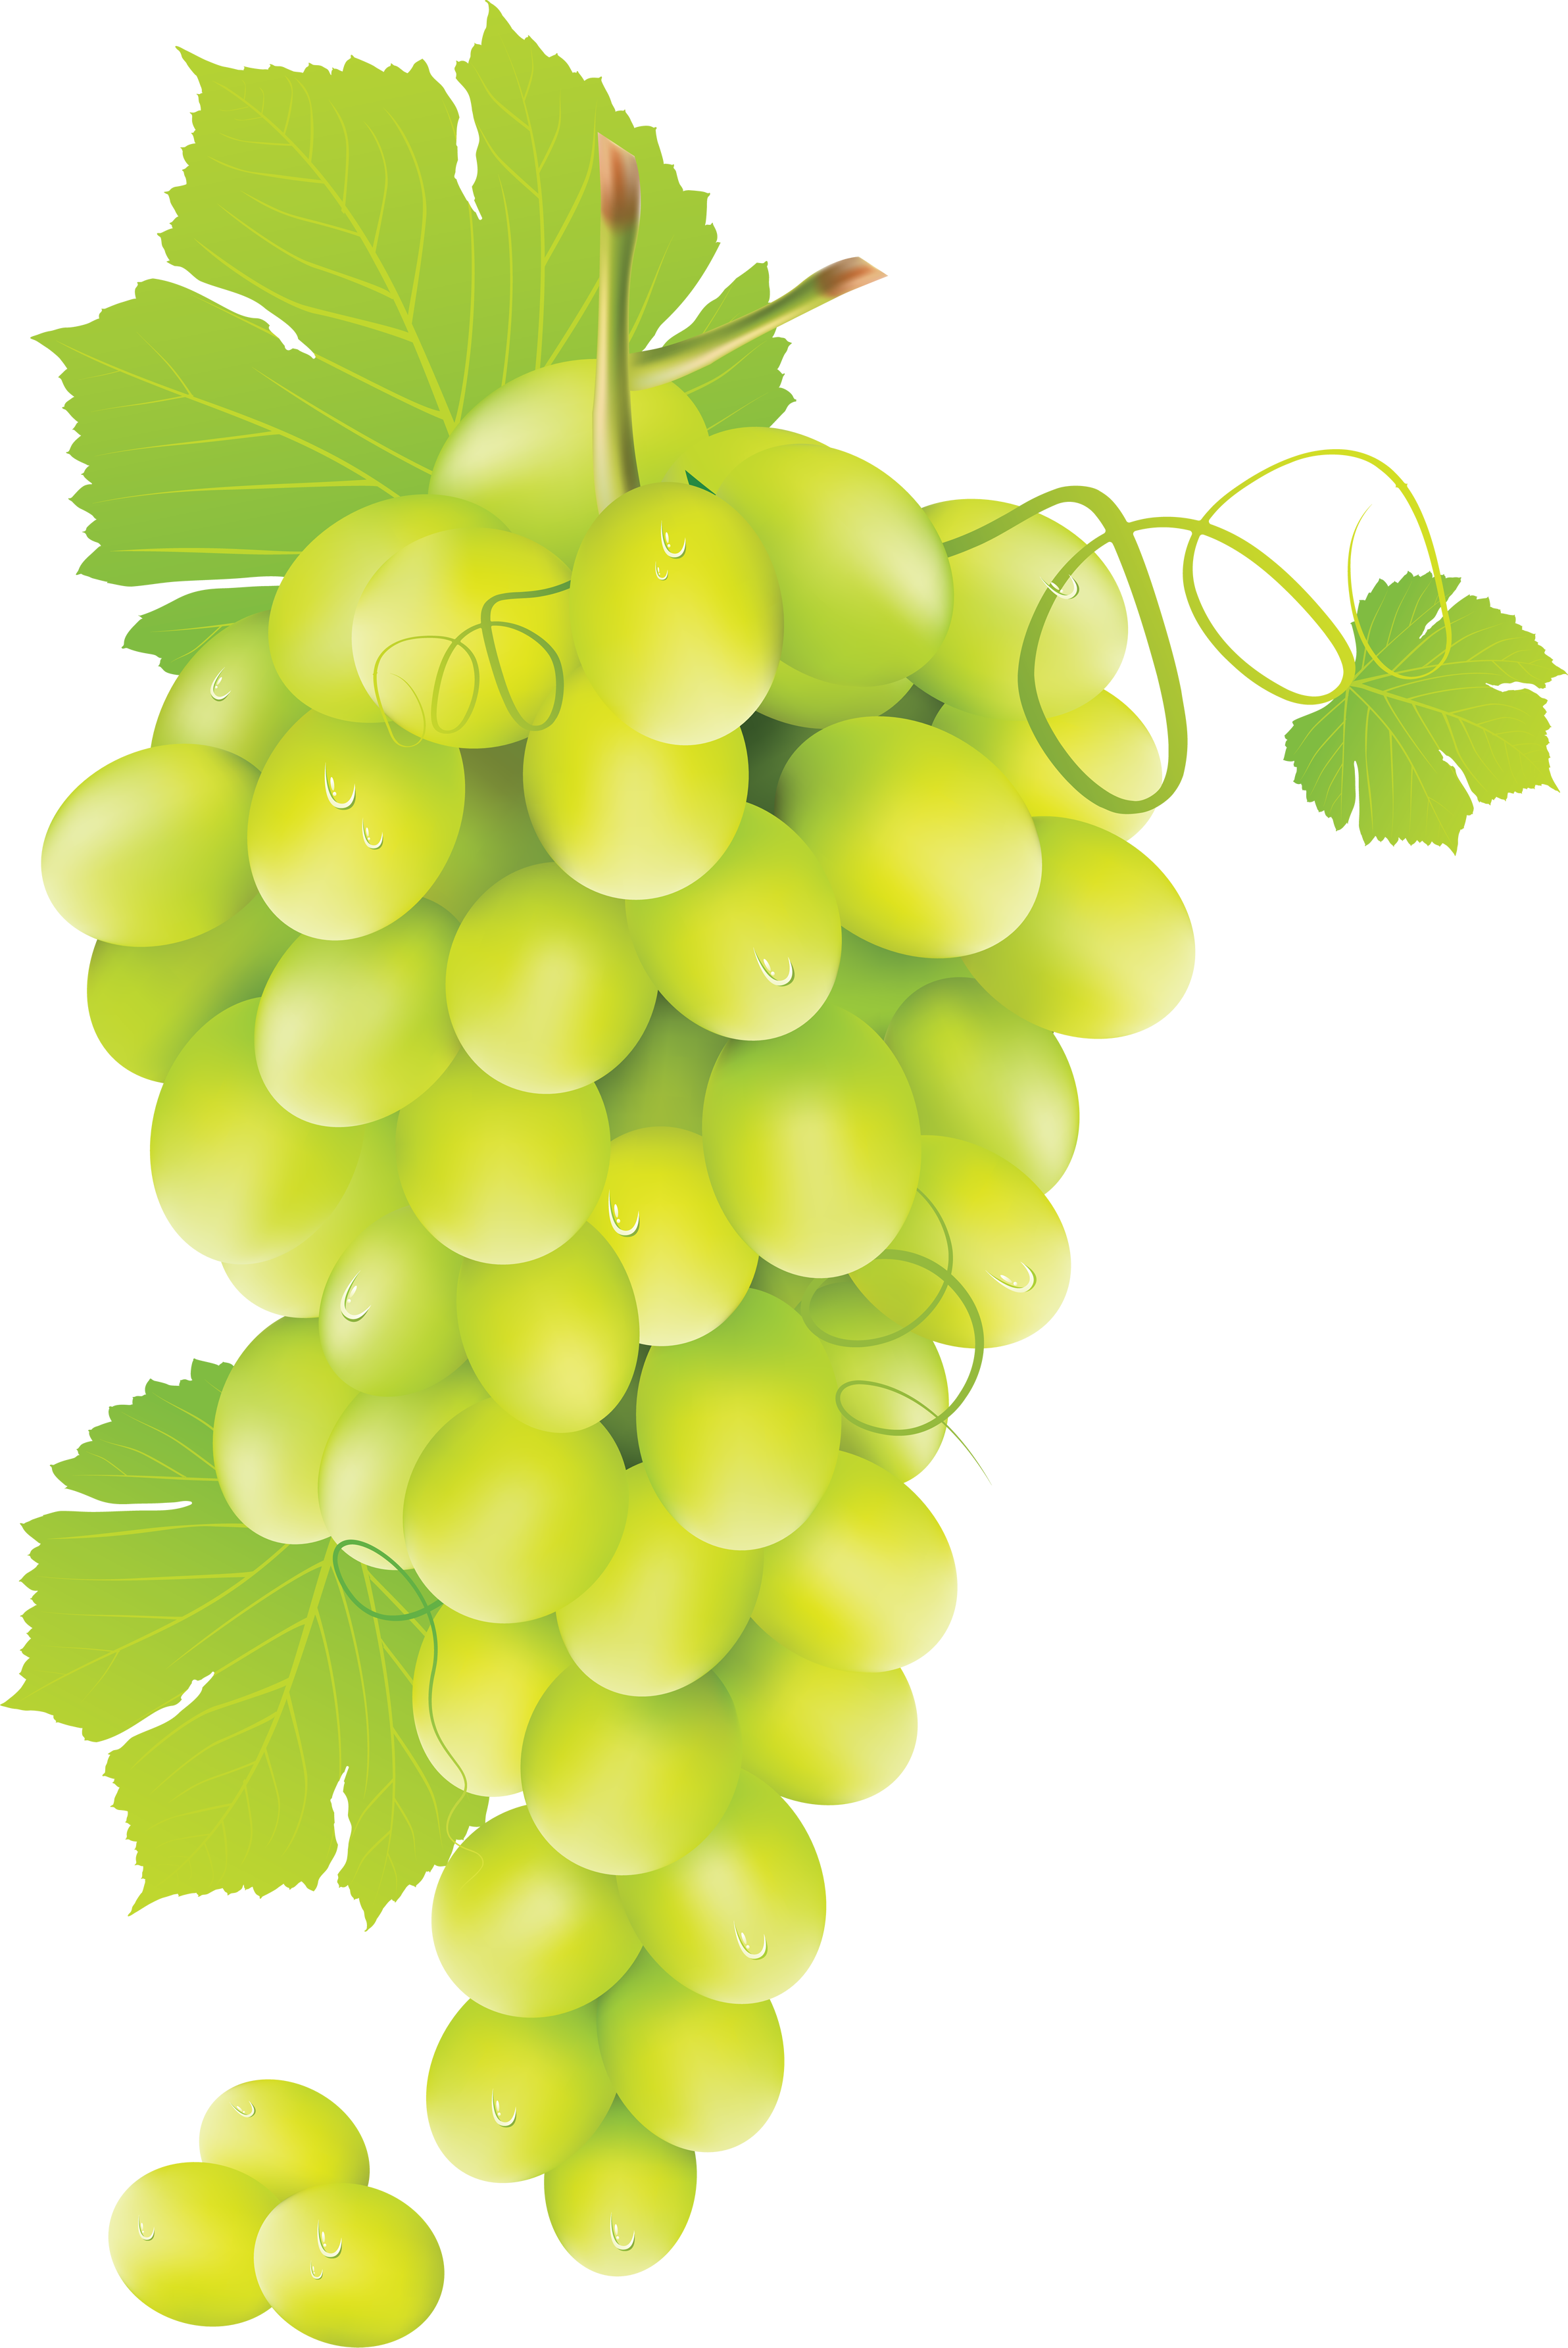 Green Juicy Grapes Download HQ PNG Image